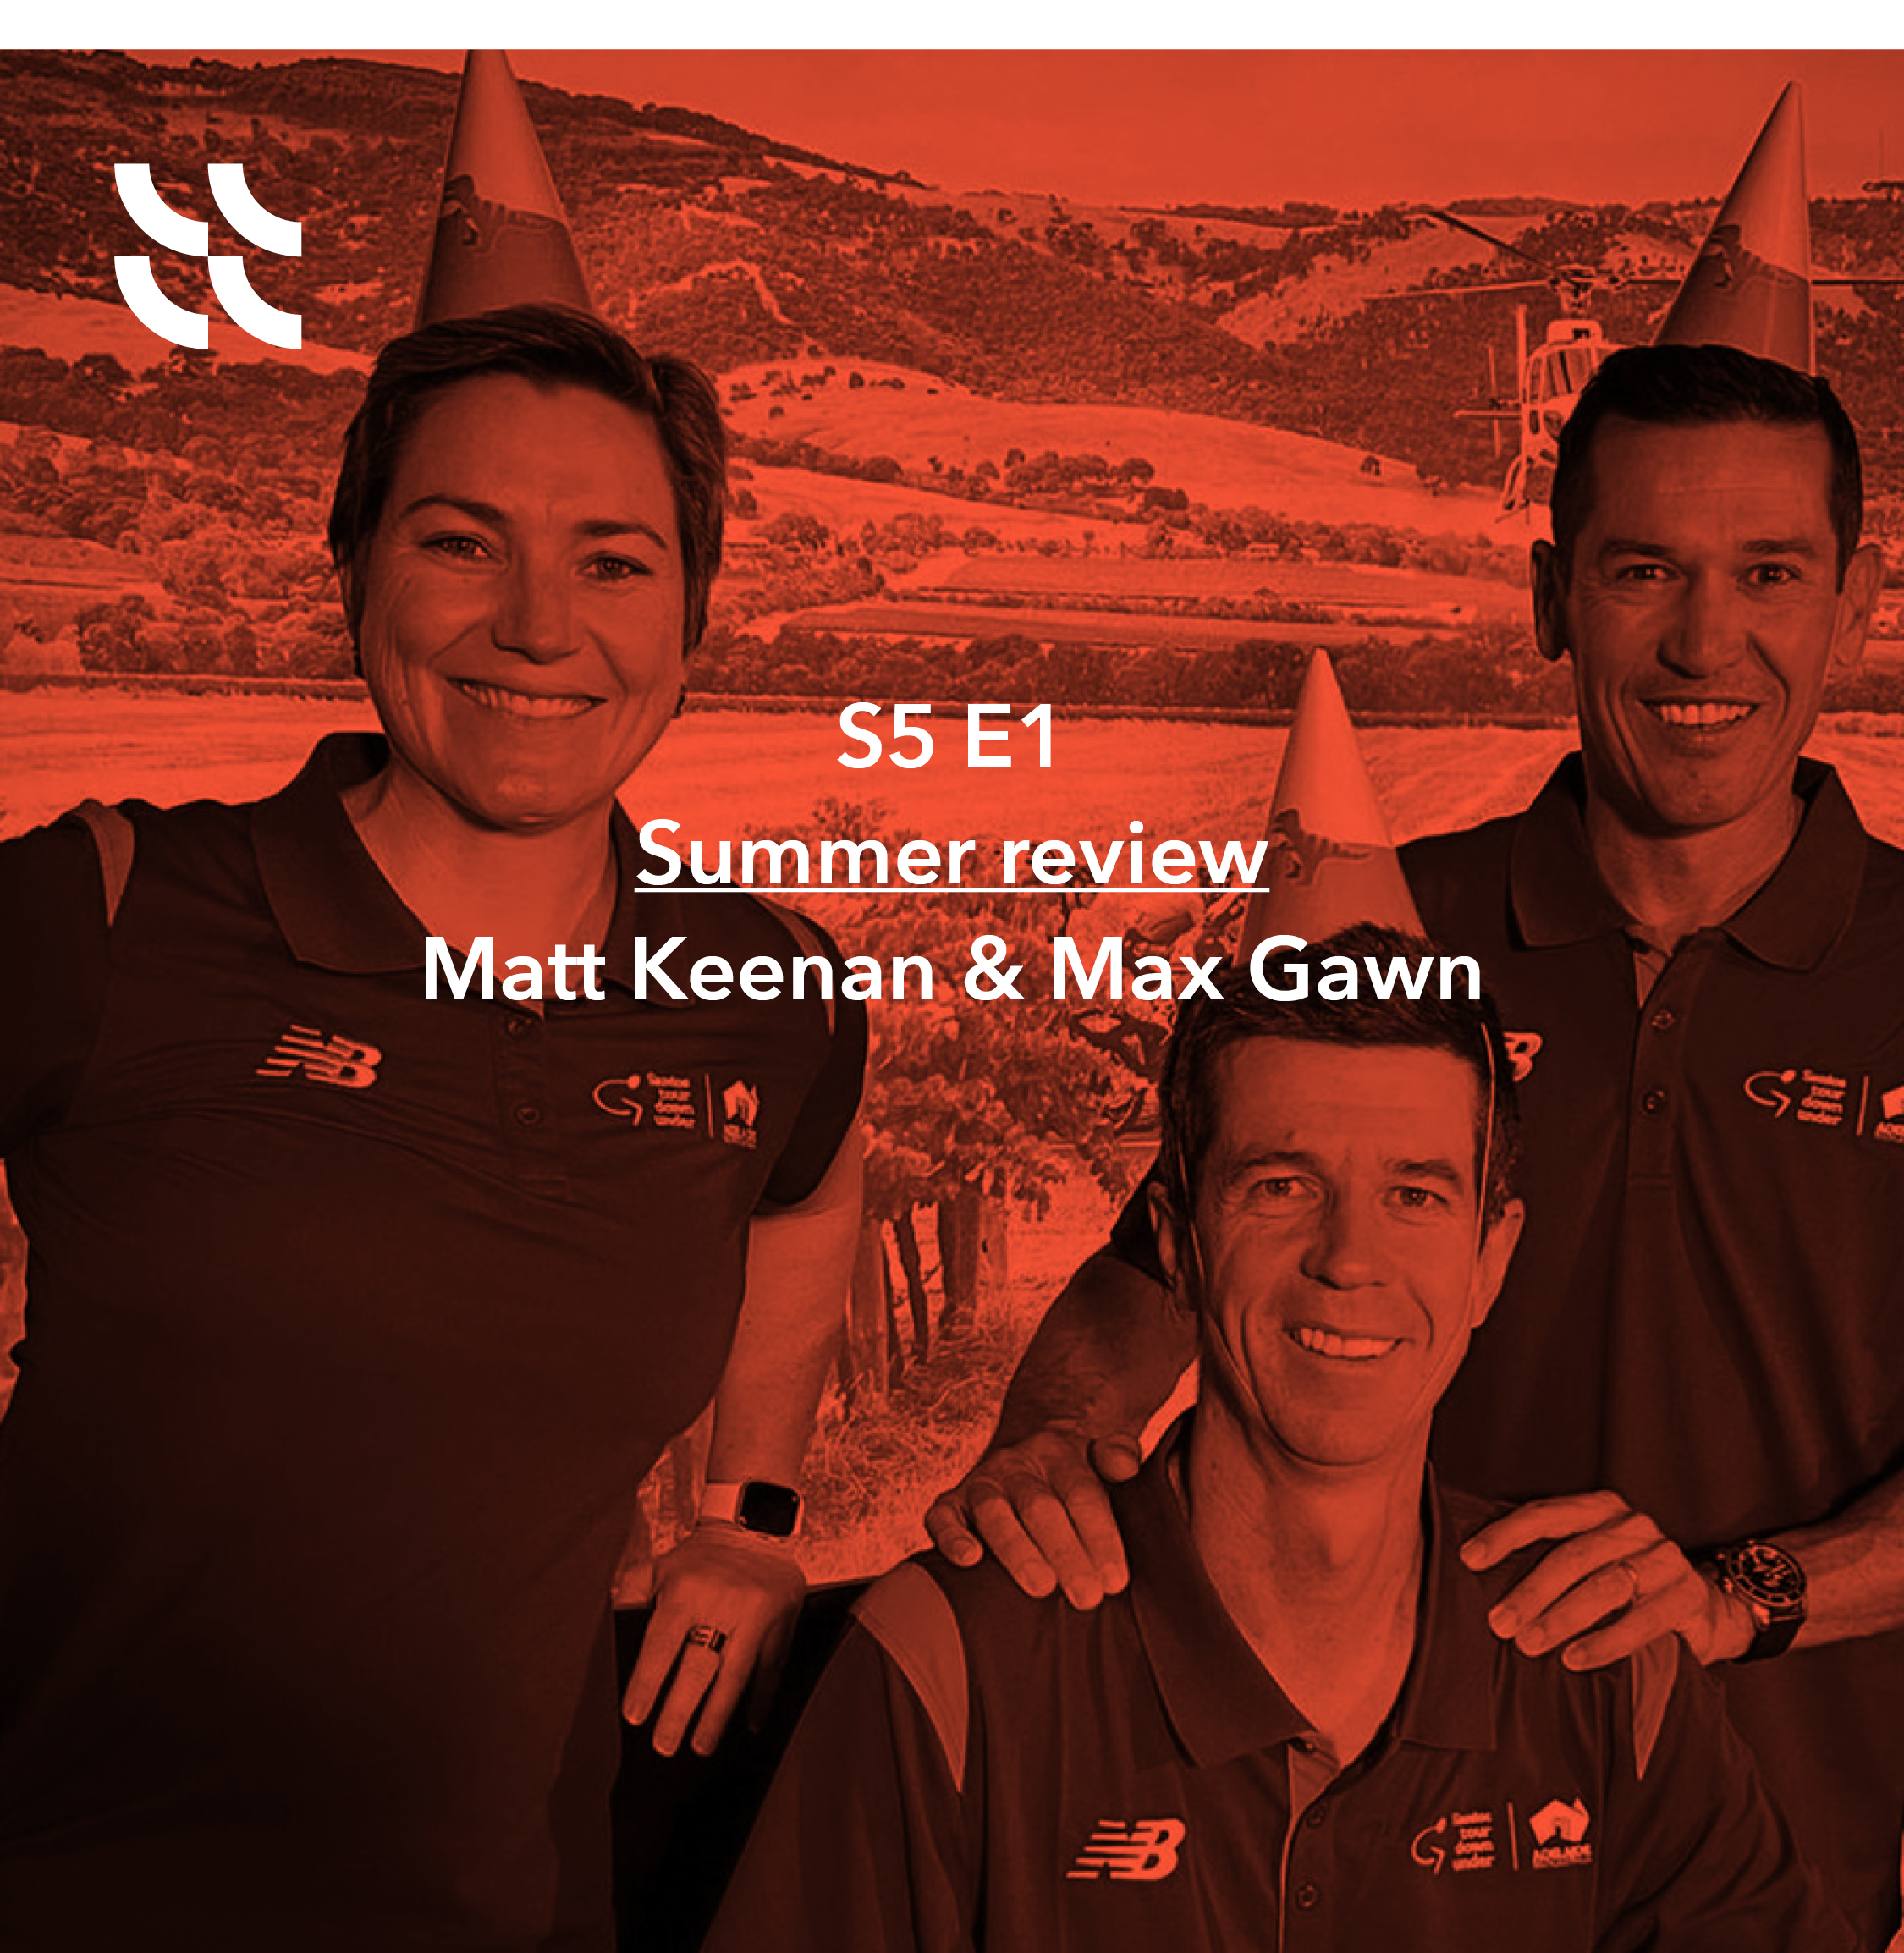 Australian summer | Matt Keenan & Max Gawn